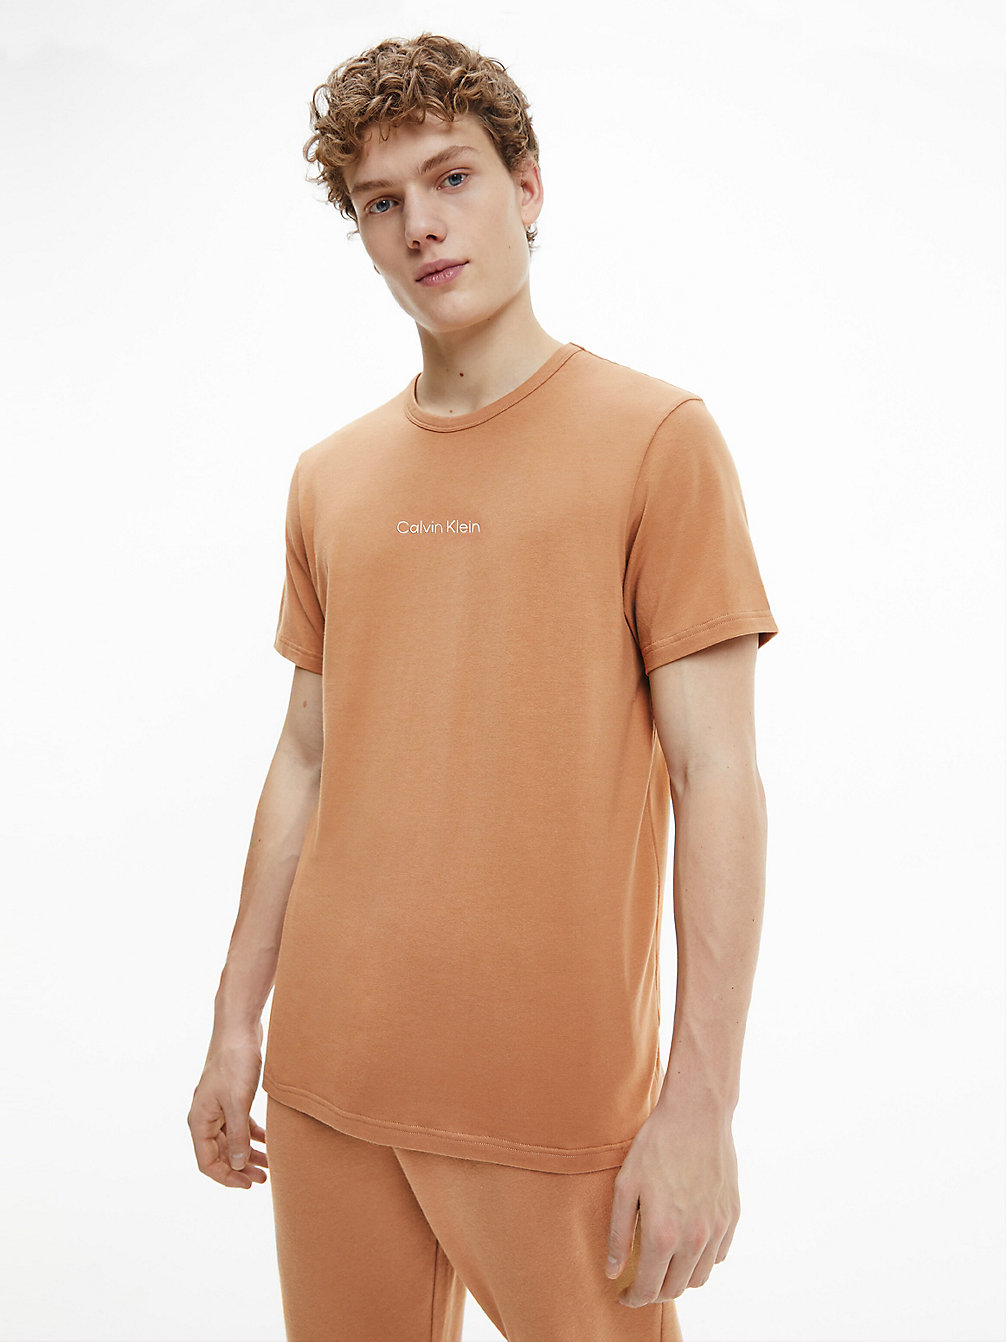 SANDALWOOD Lounge T-Shirt undefined men Calvin Klein